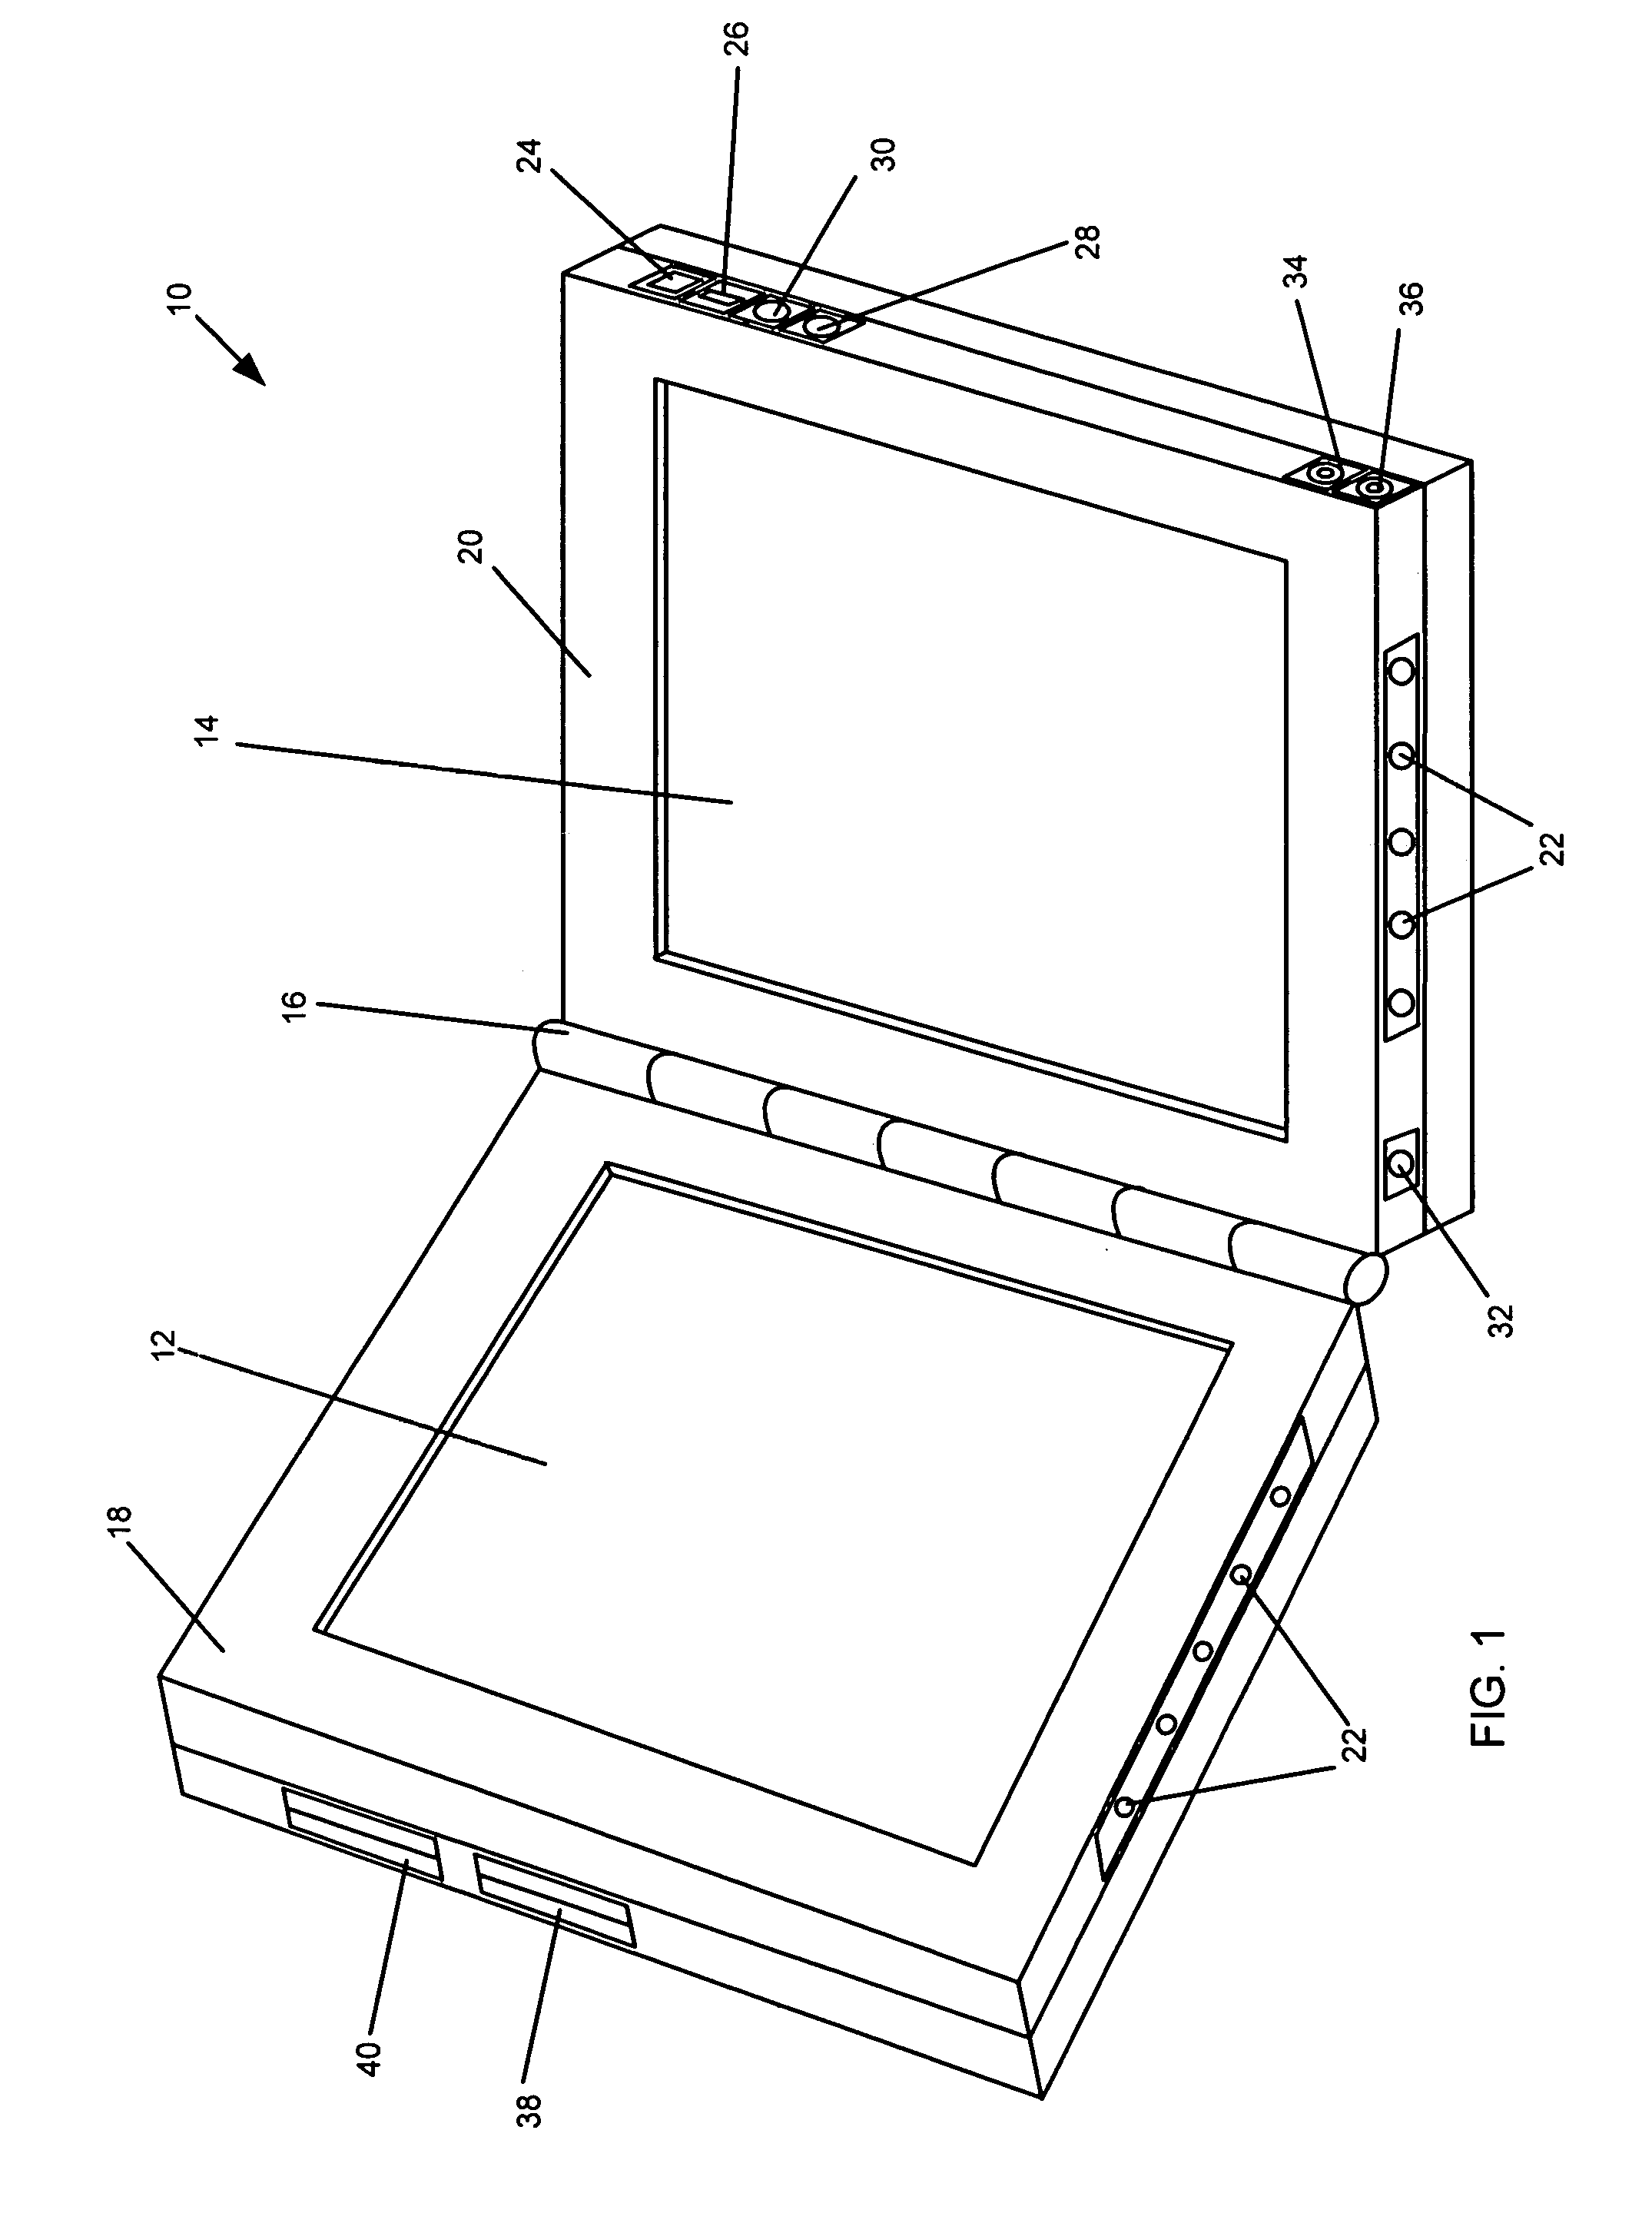 Computer display apparatus